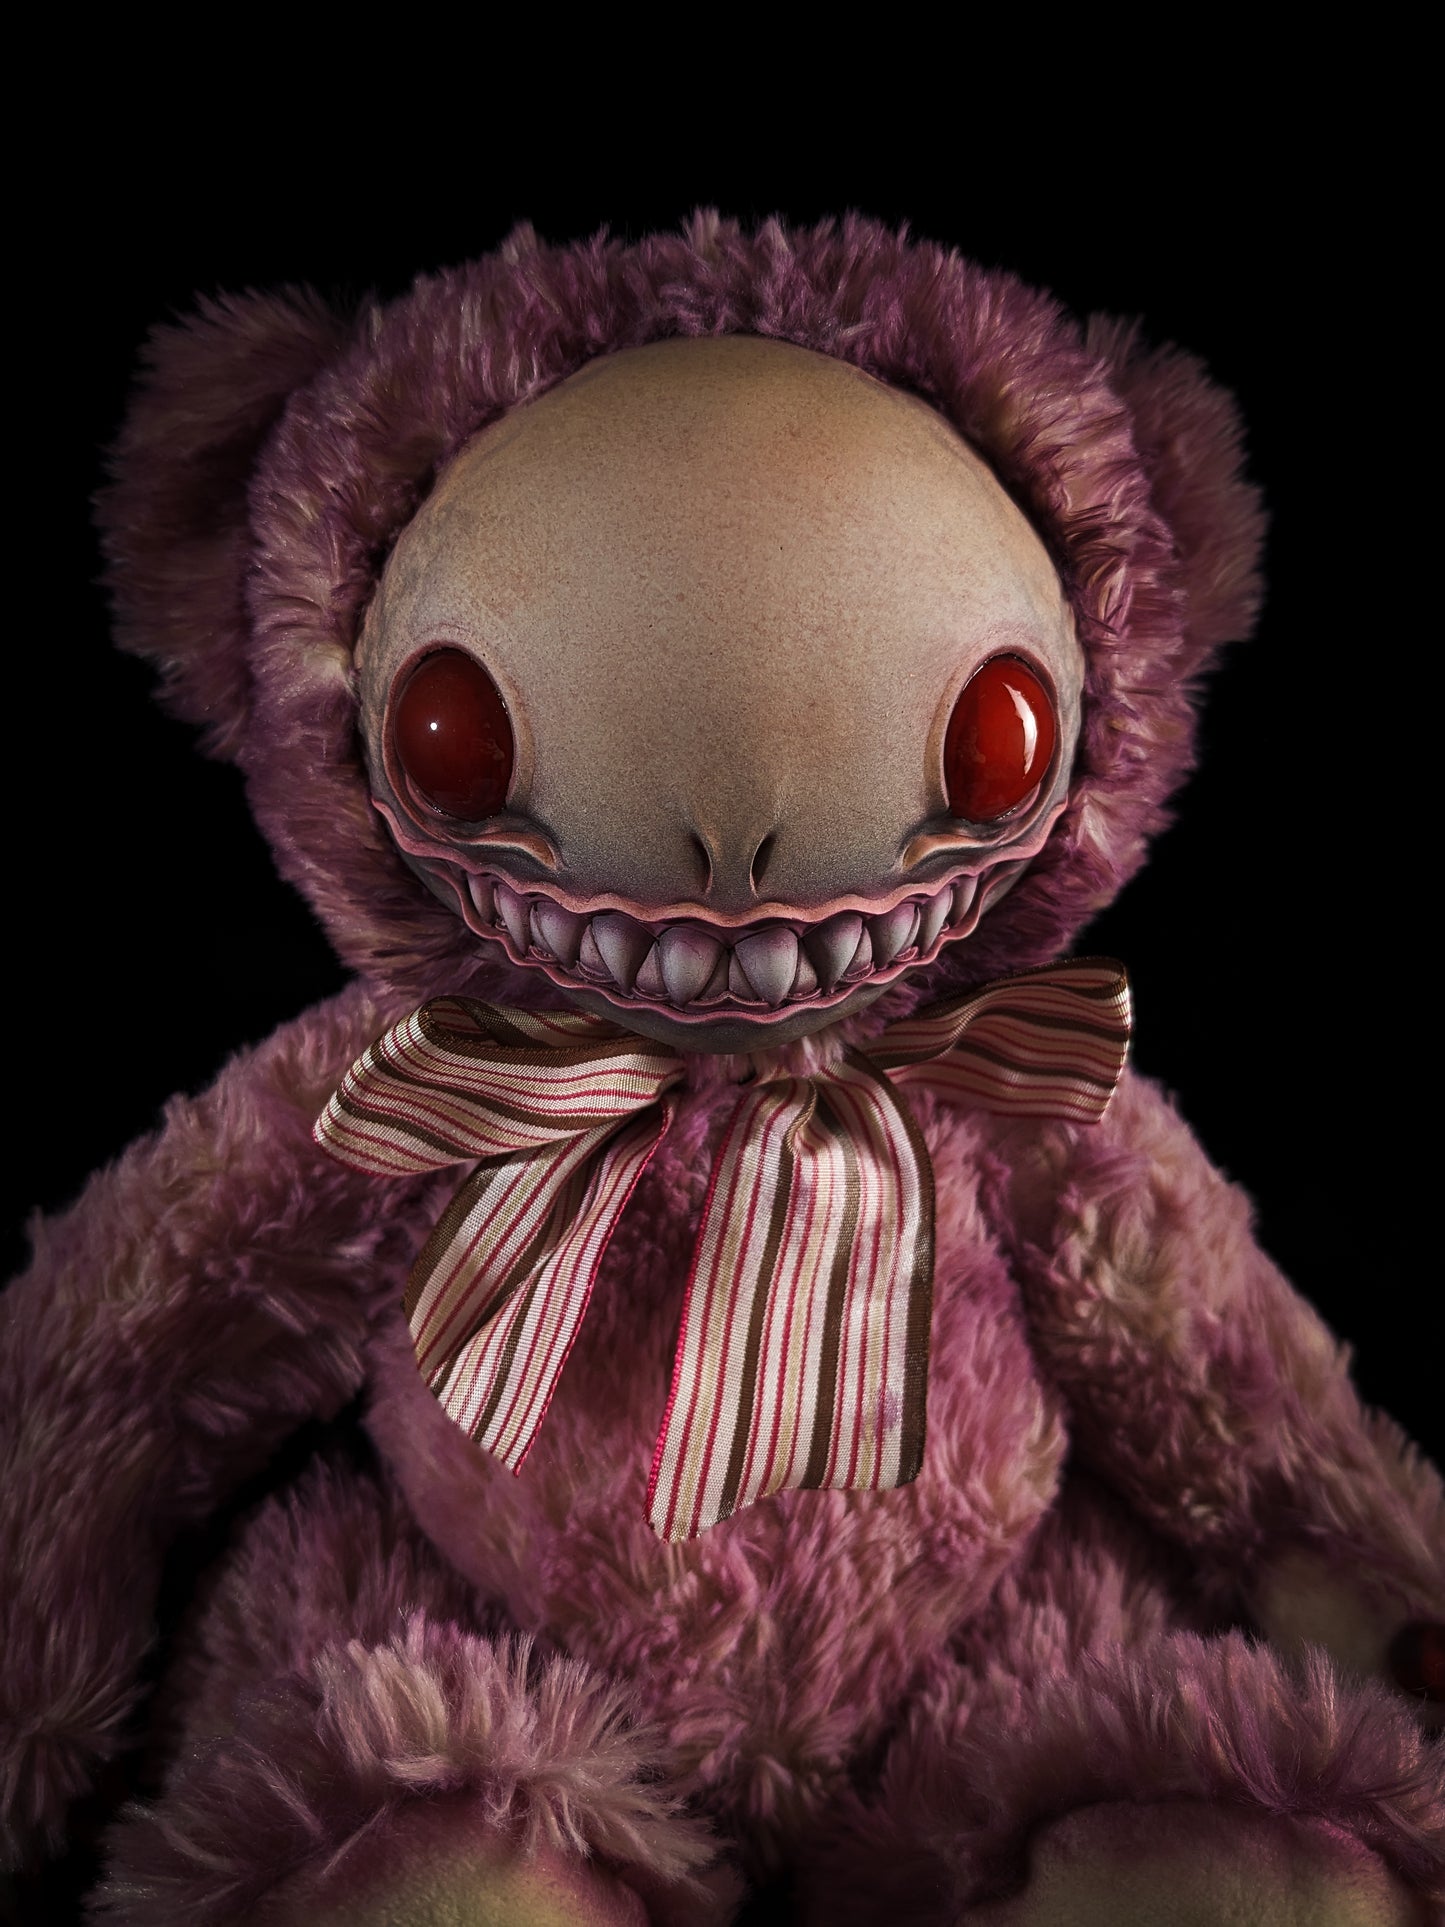 Friend (Glistening Split ver.) - Monster Art Doll Plush Toy